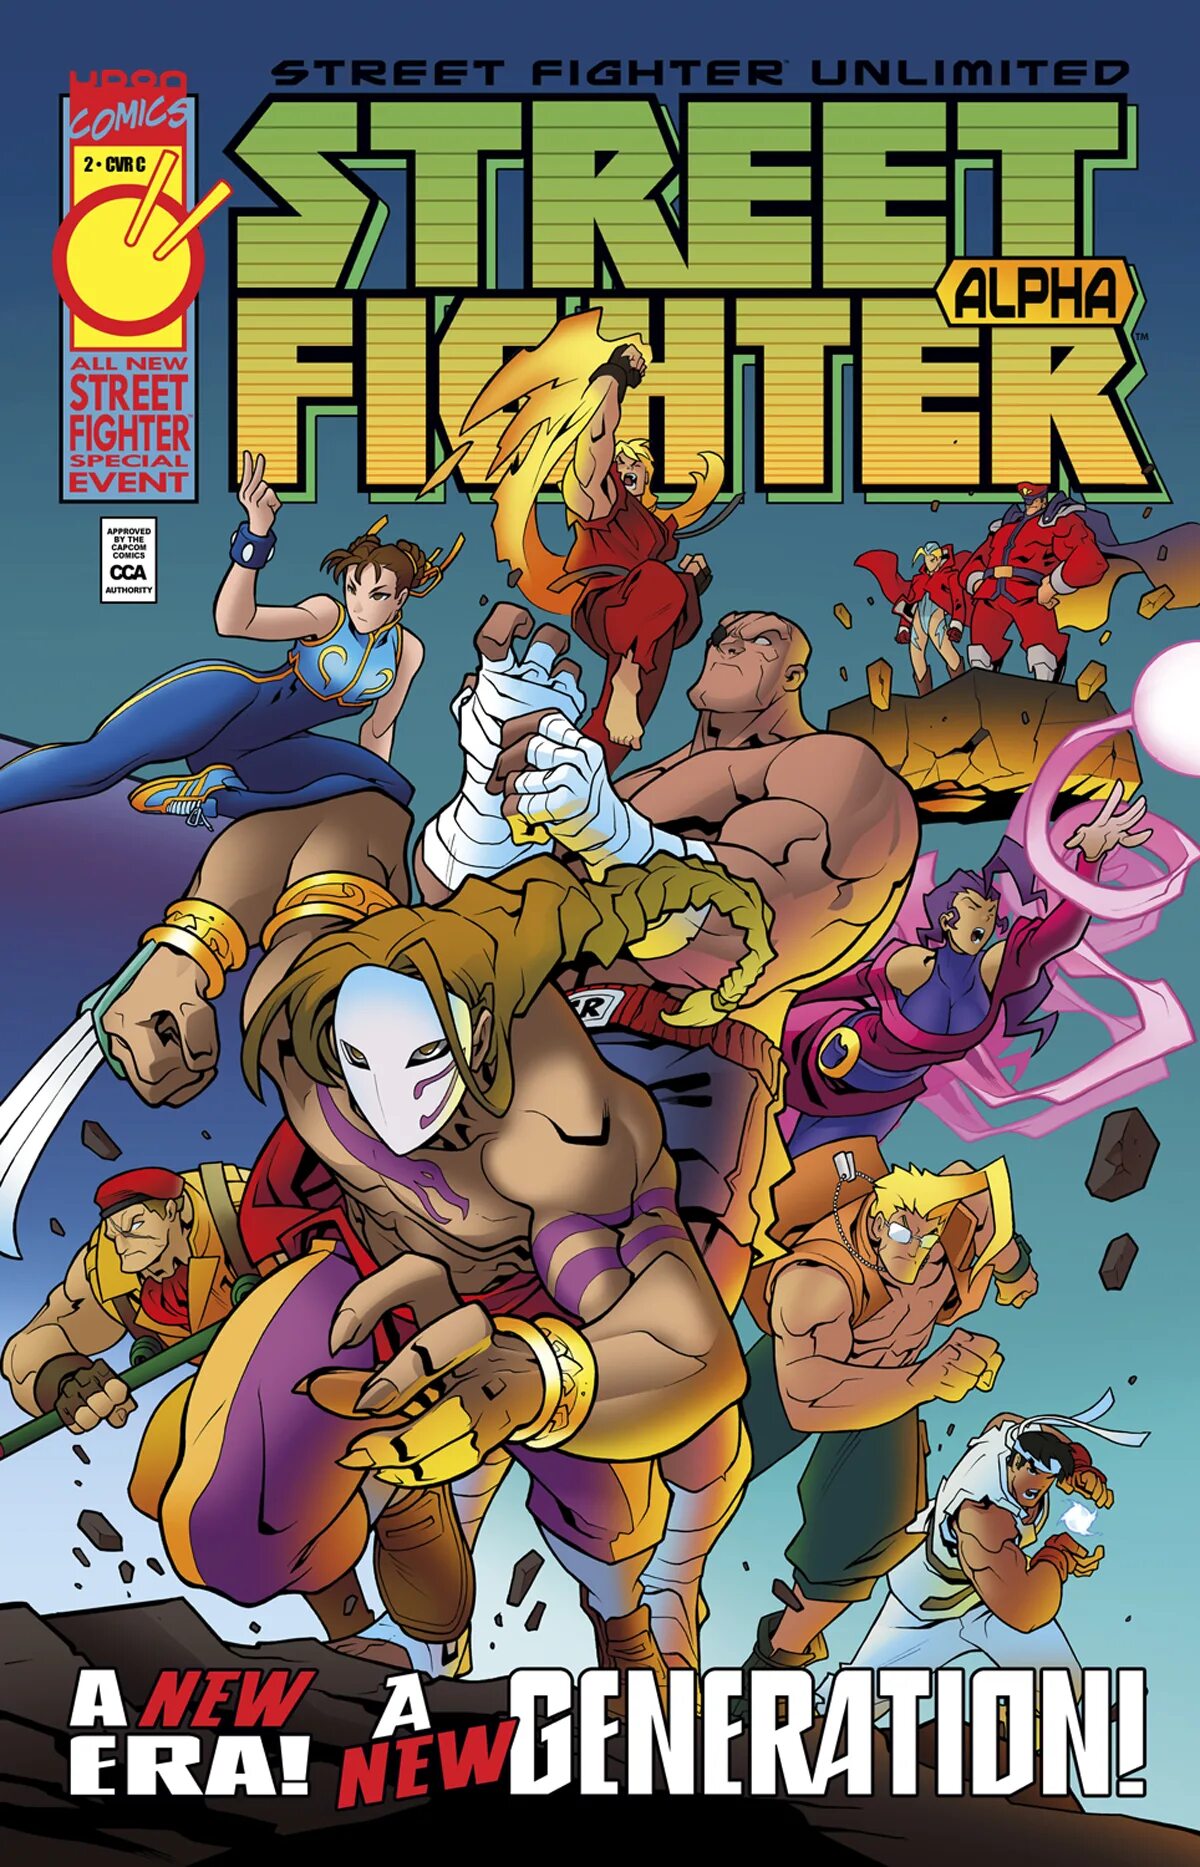 Street Fighter комикс. Боец комиксы. Street Fighter Comic Udon read. Street Fighter Unlimited Comics (Issue #1).